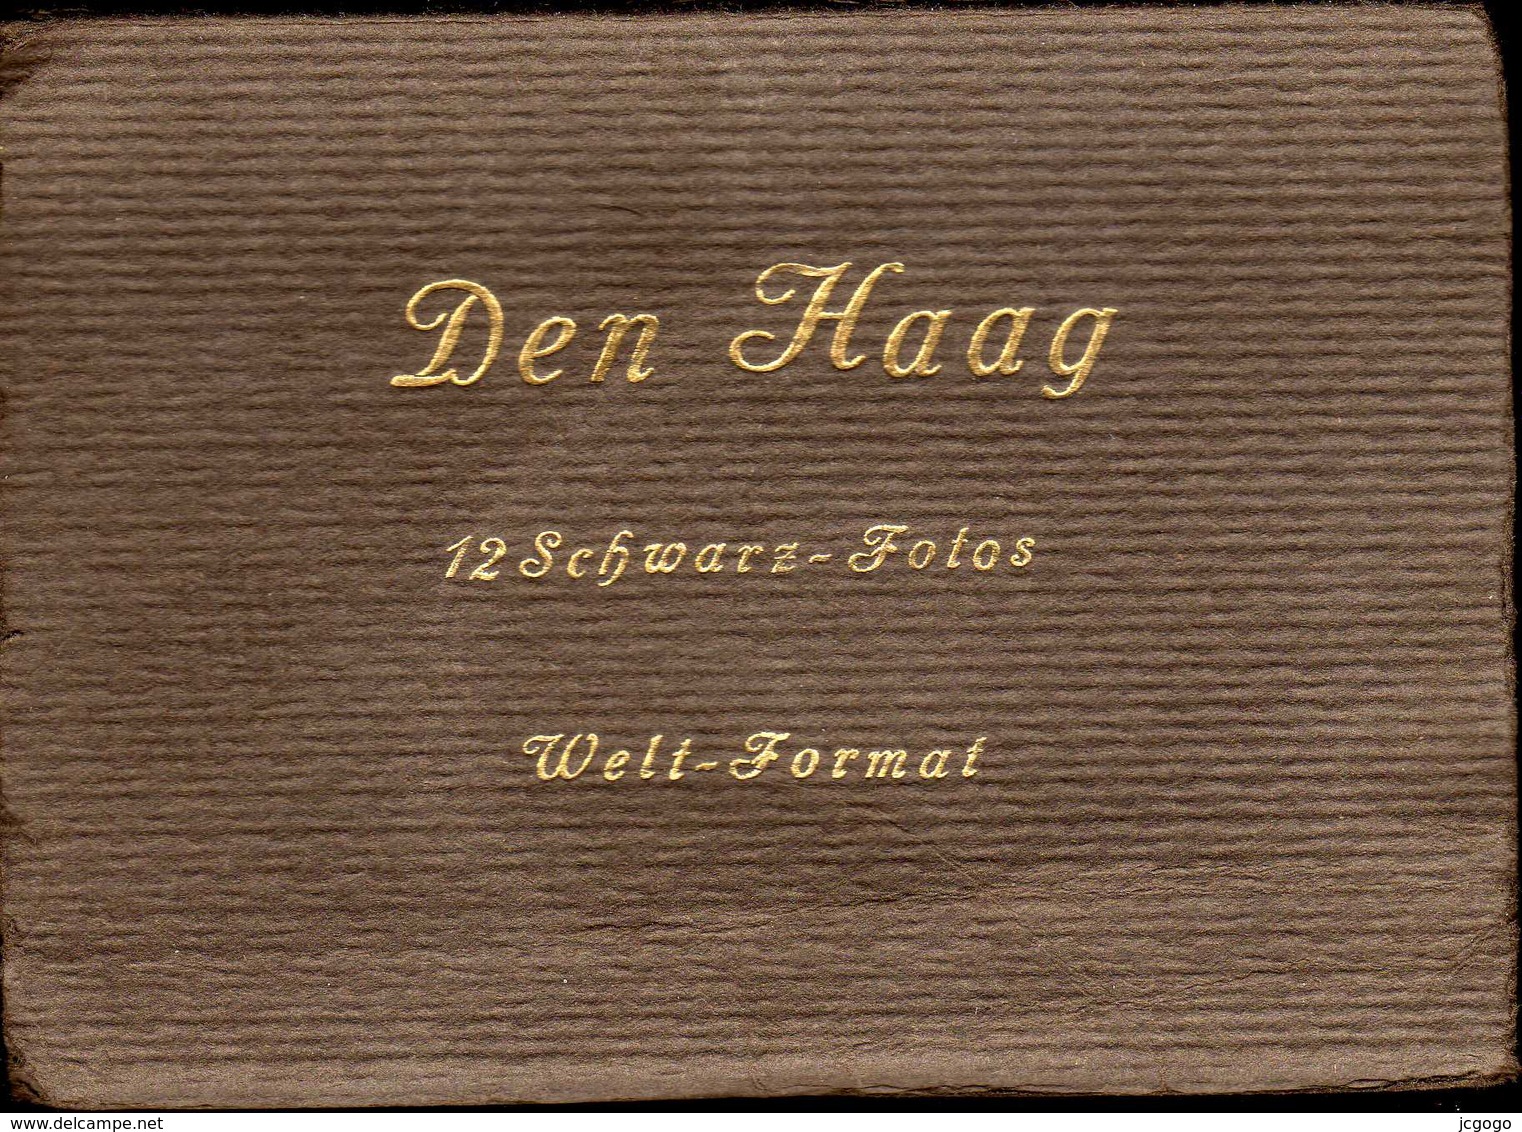 PAYS-BAS   DEN HAAG  12 Schwartz-Fotos Welt-Format - Loten, Series, Verzamelingen